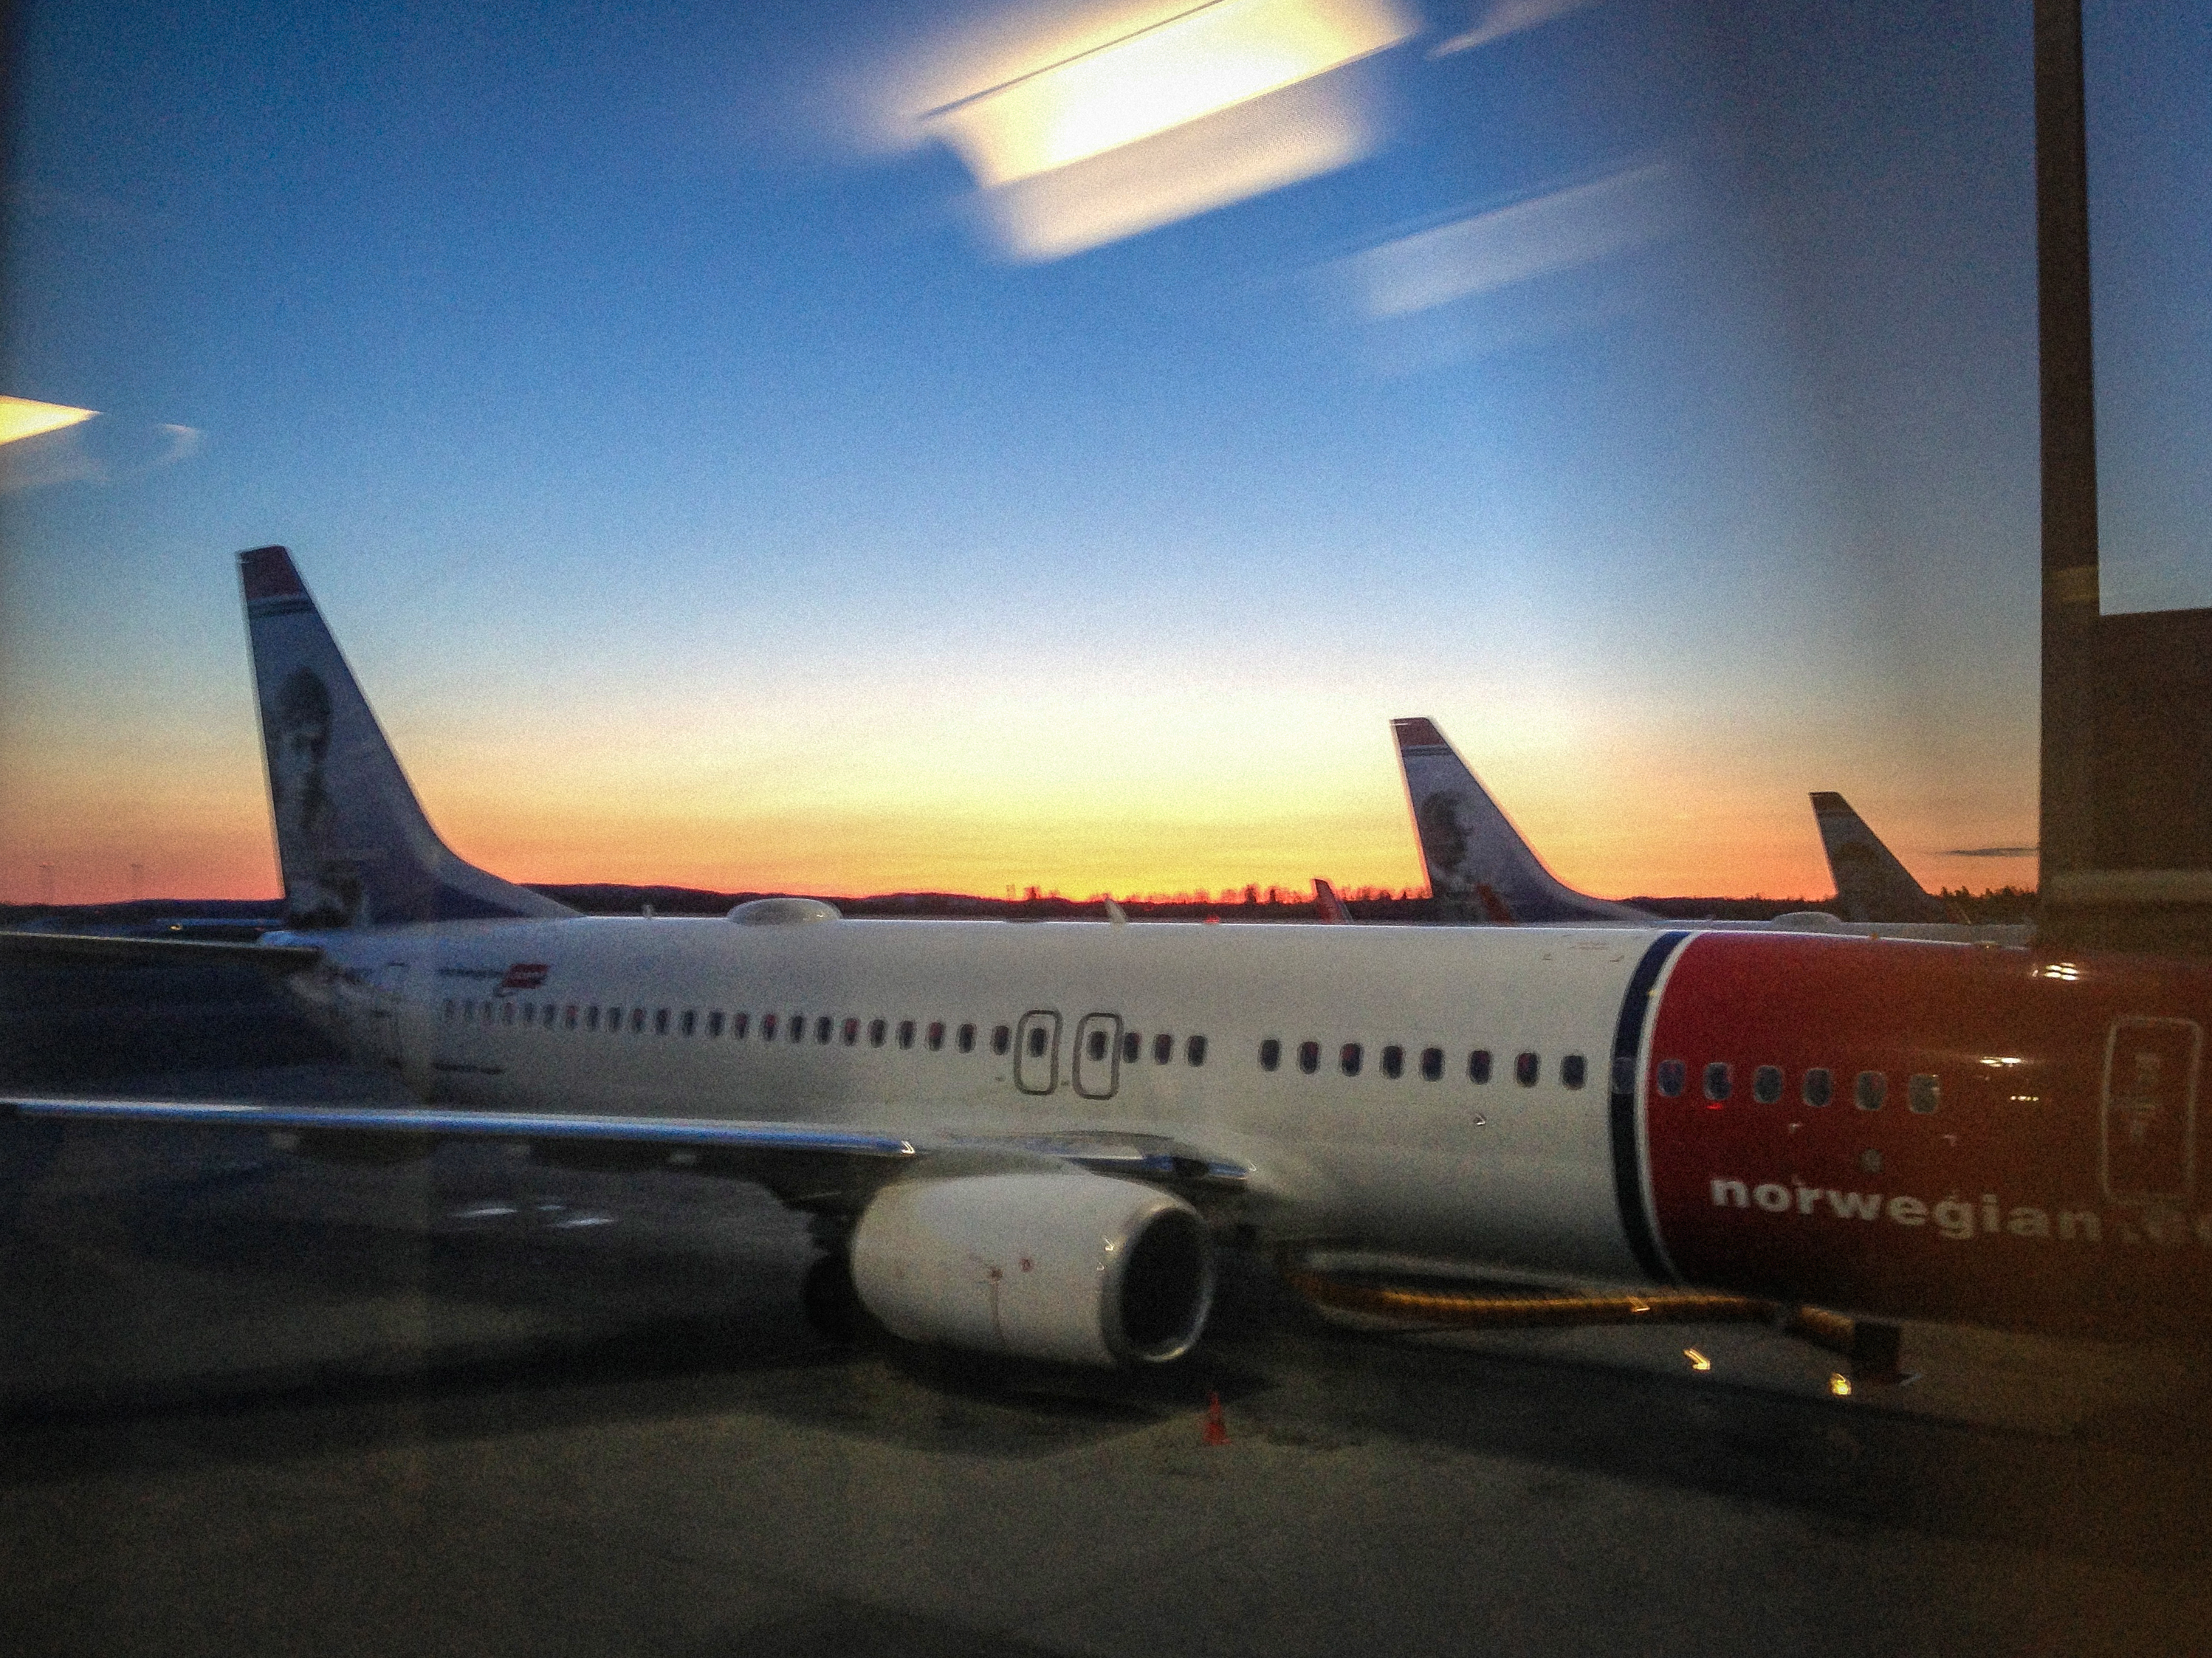 Nice sunrise over Oslo